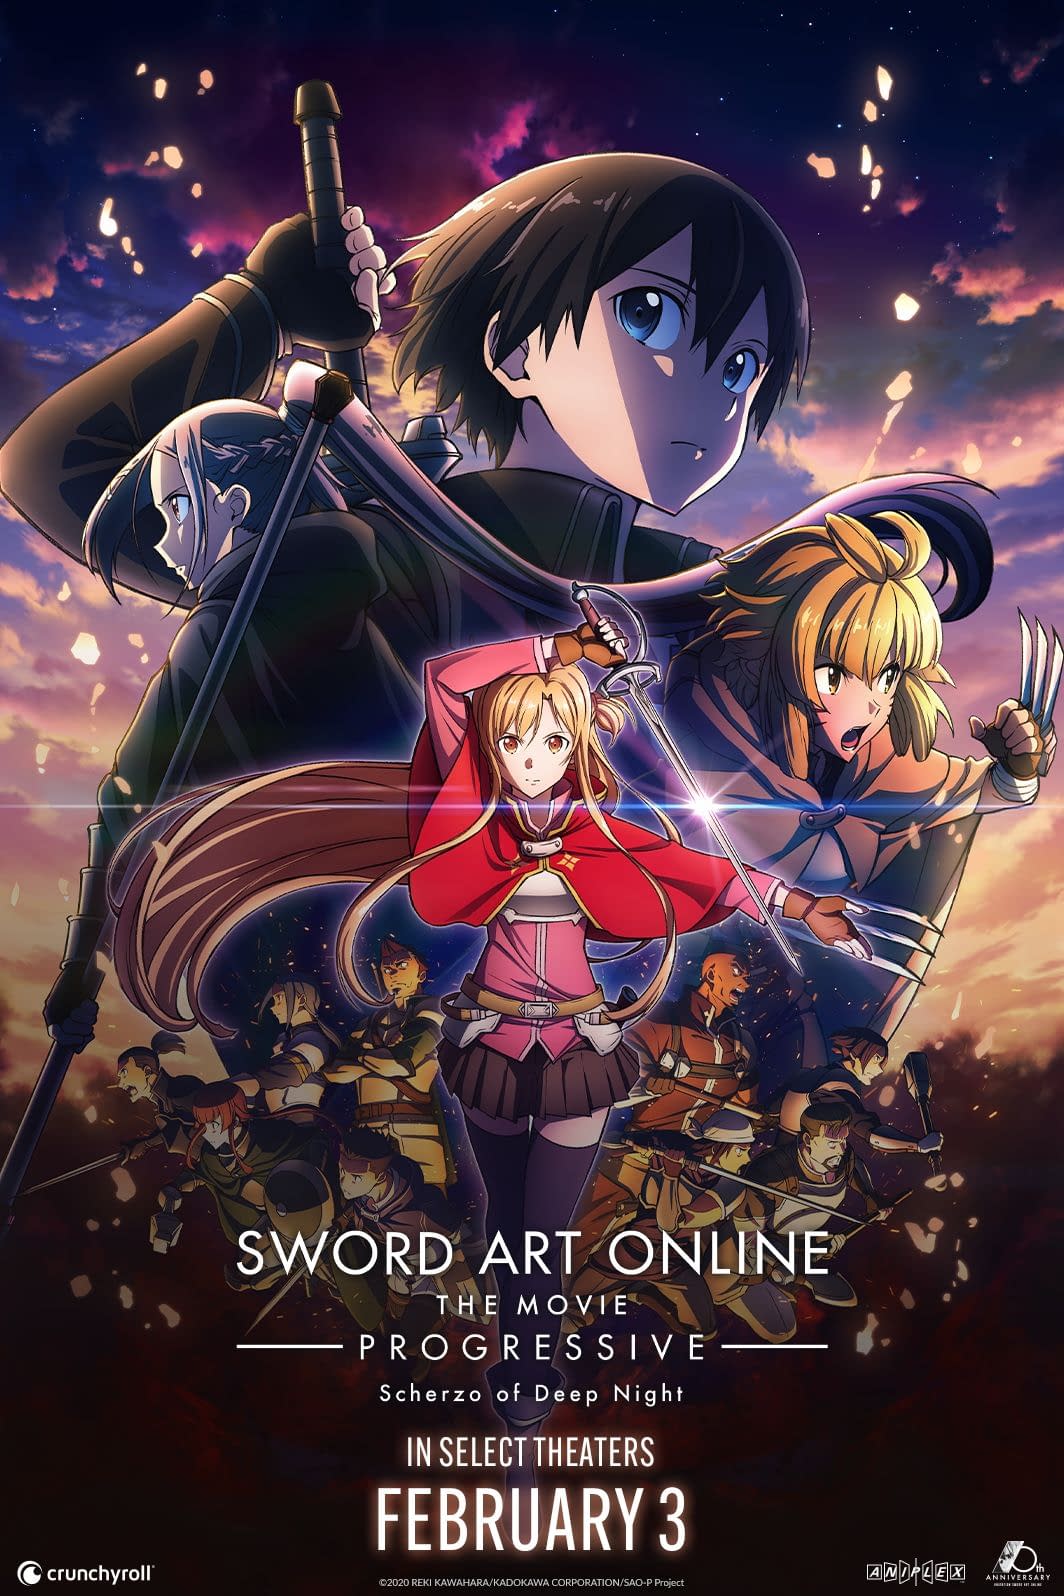 Sword Art Online Progressive, Vol. 2 (manga) on Apple Books